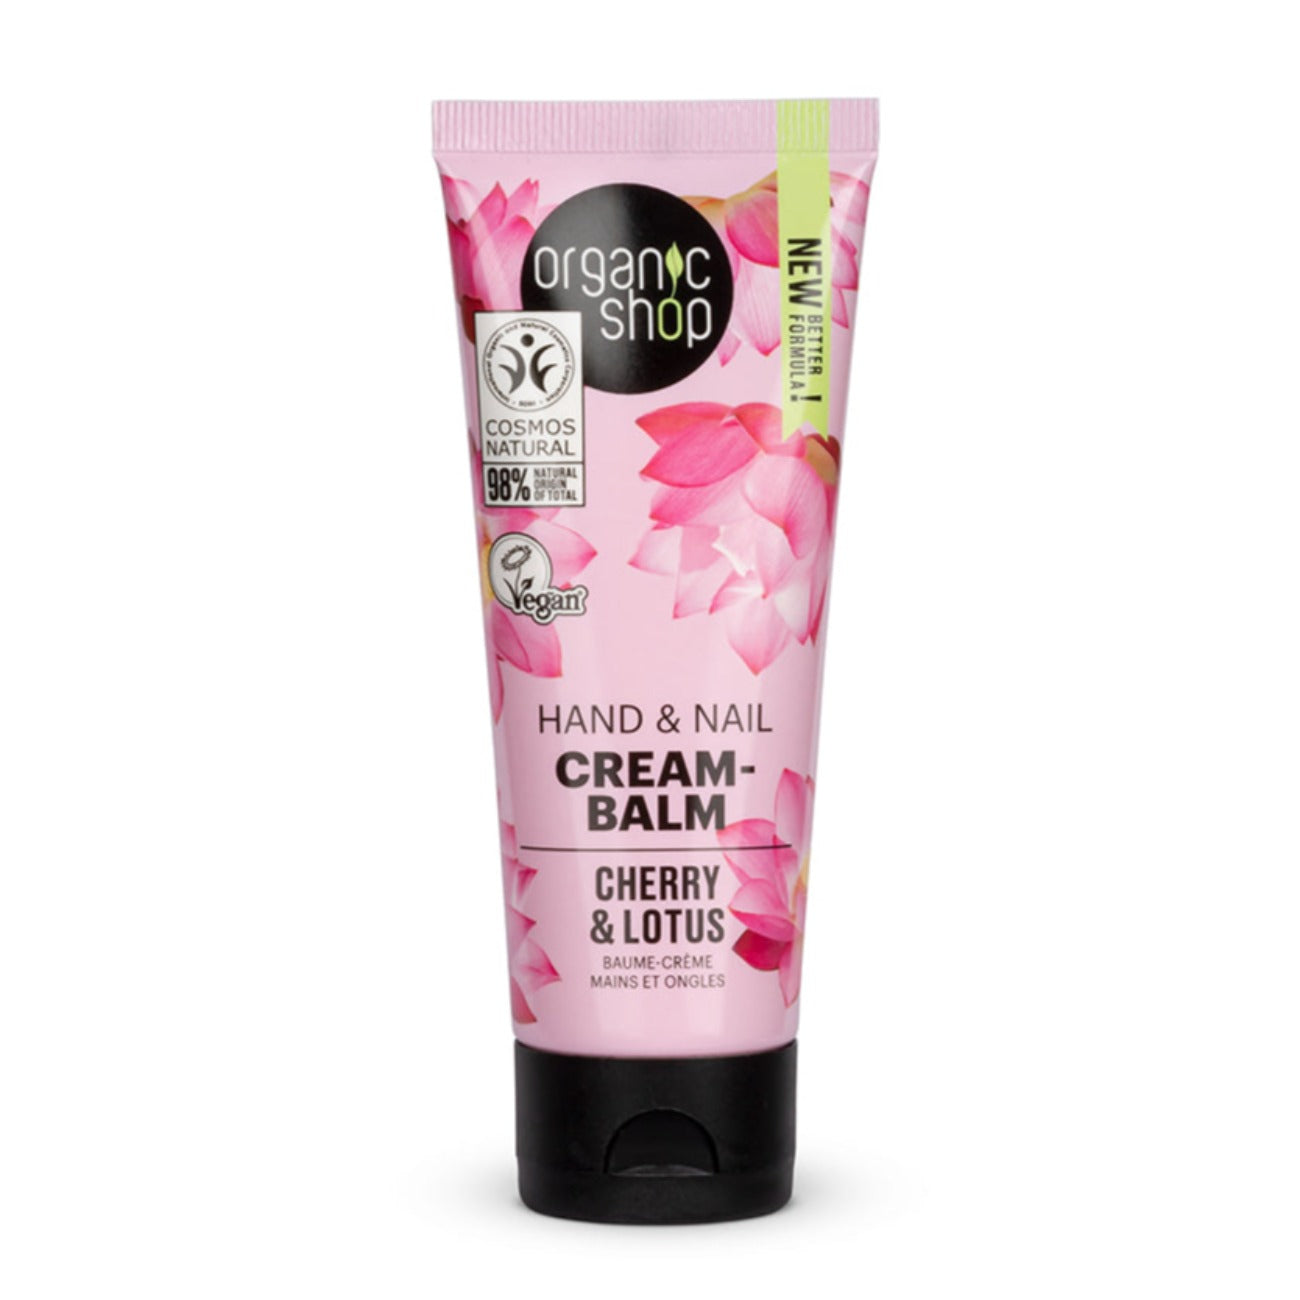 Organic Shop Hand & Nail Cream-Balm Cherry & Lotus 75ml